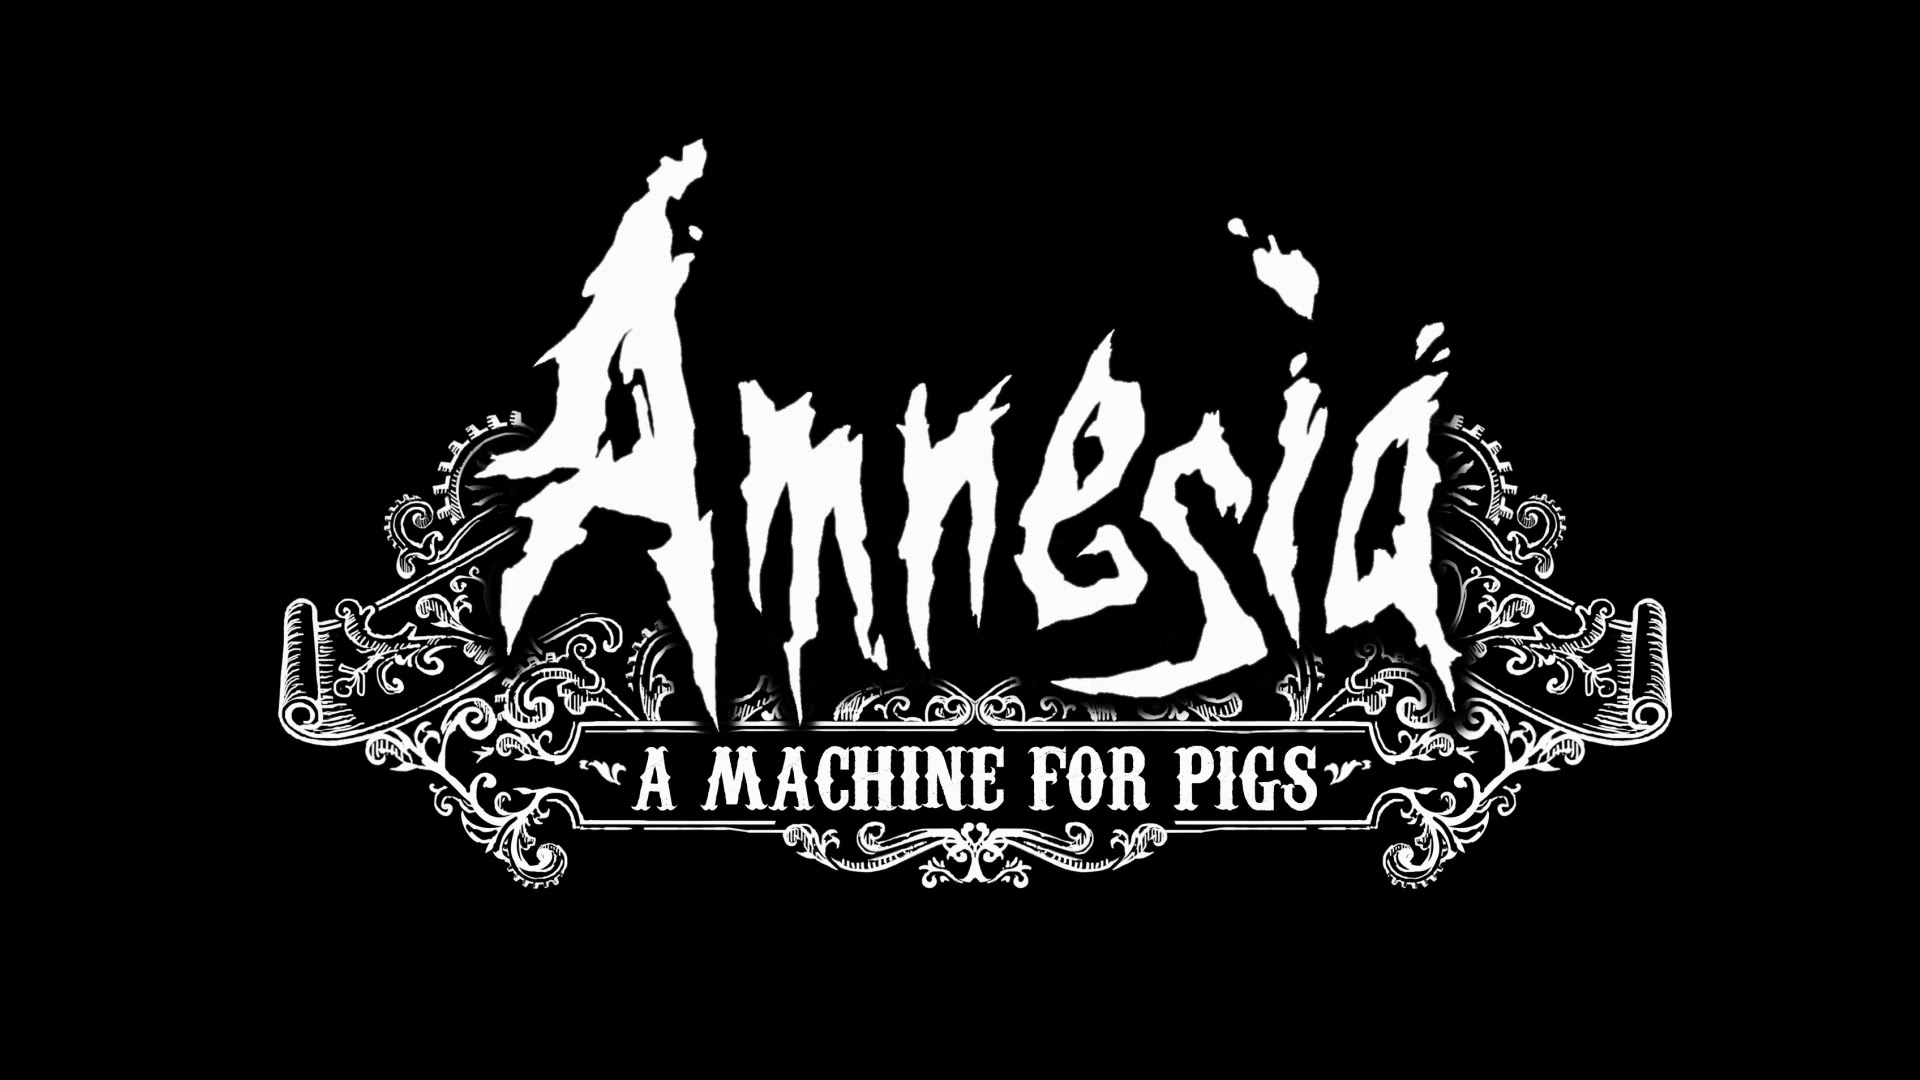 Una partida al billar? Amnesia: A machine for pigs #2 de Xavalma